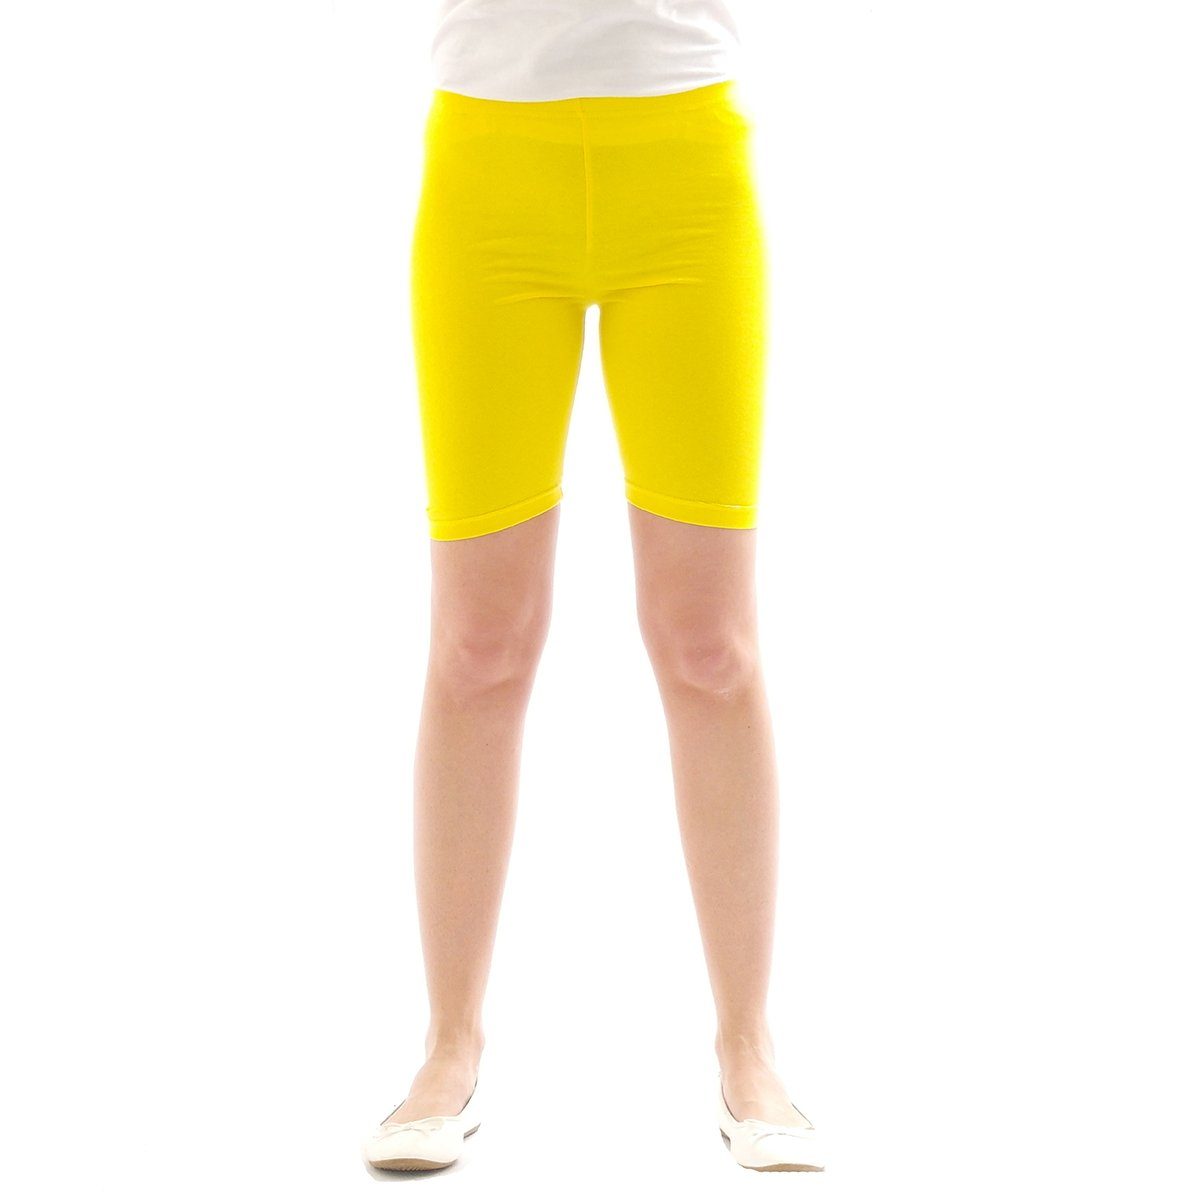 SYS Shorts Kinder Shorts Sport Pants 1/2 Baumwolle Jungen Mädchen gelb